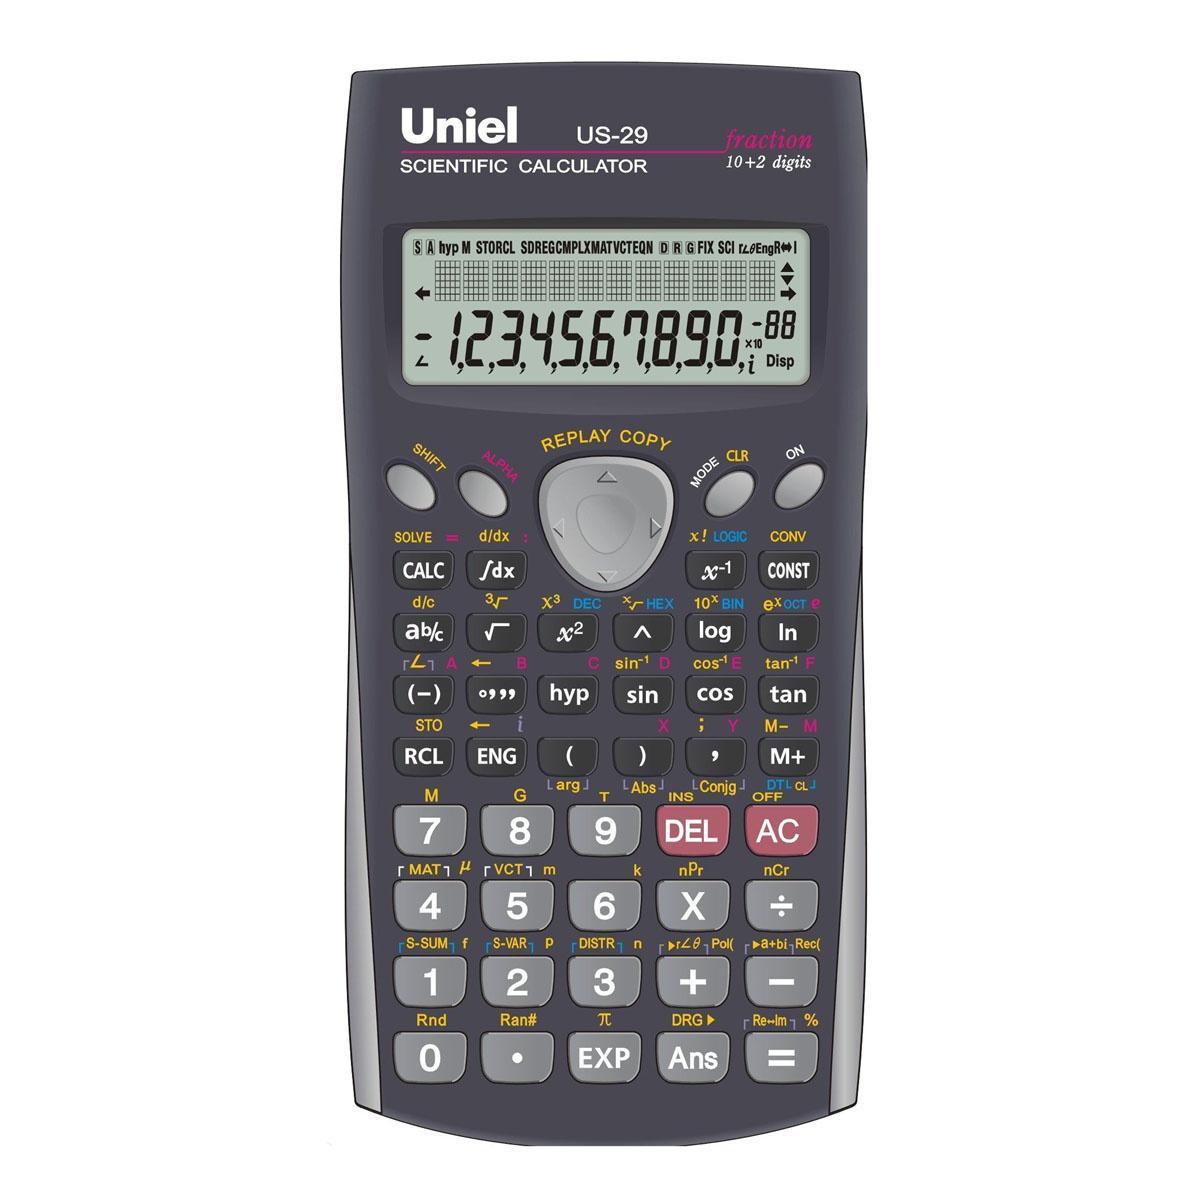 Калькулятор науч. Uniel US-29 162*79-15мм, 10 разр.мантиссы+2разр.экспоненты, 401функц.